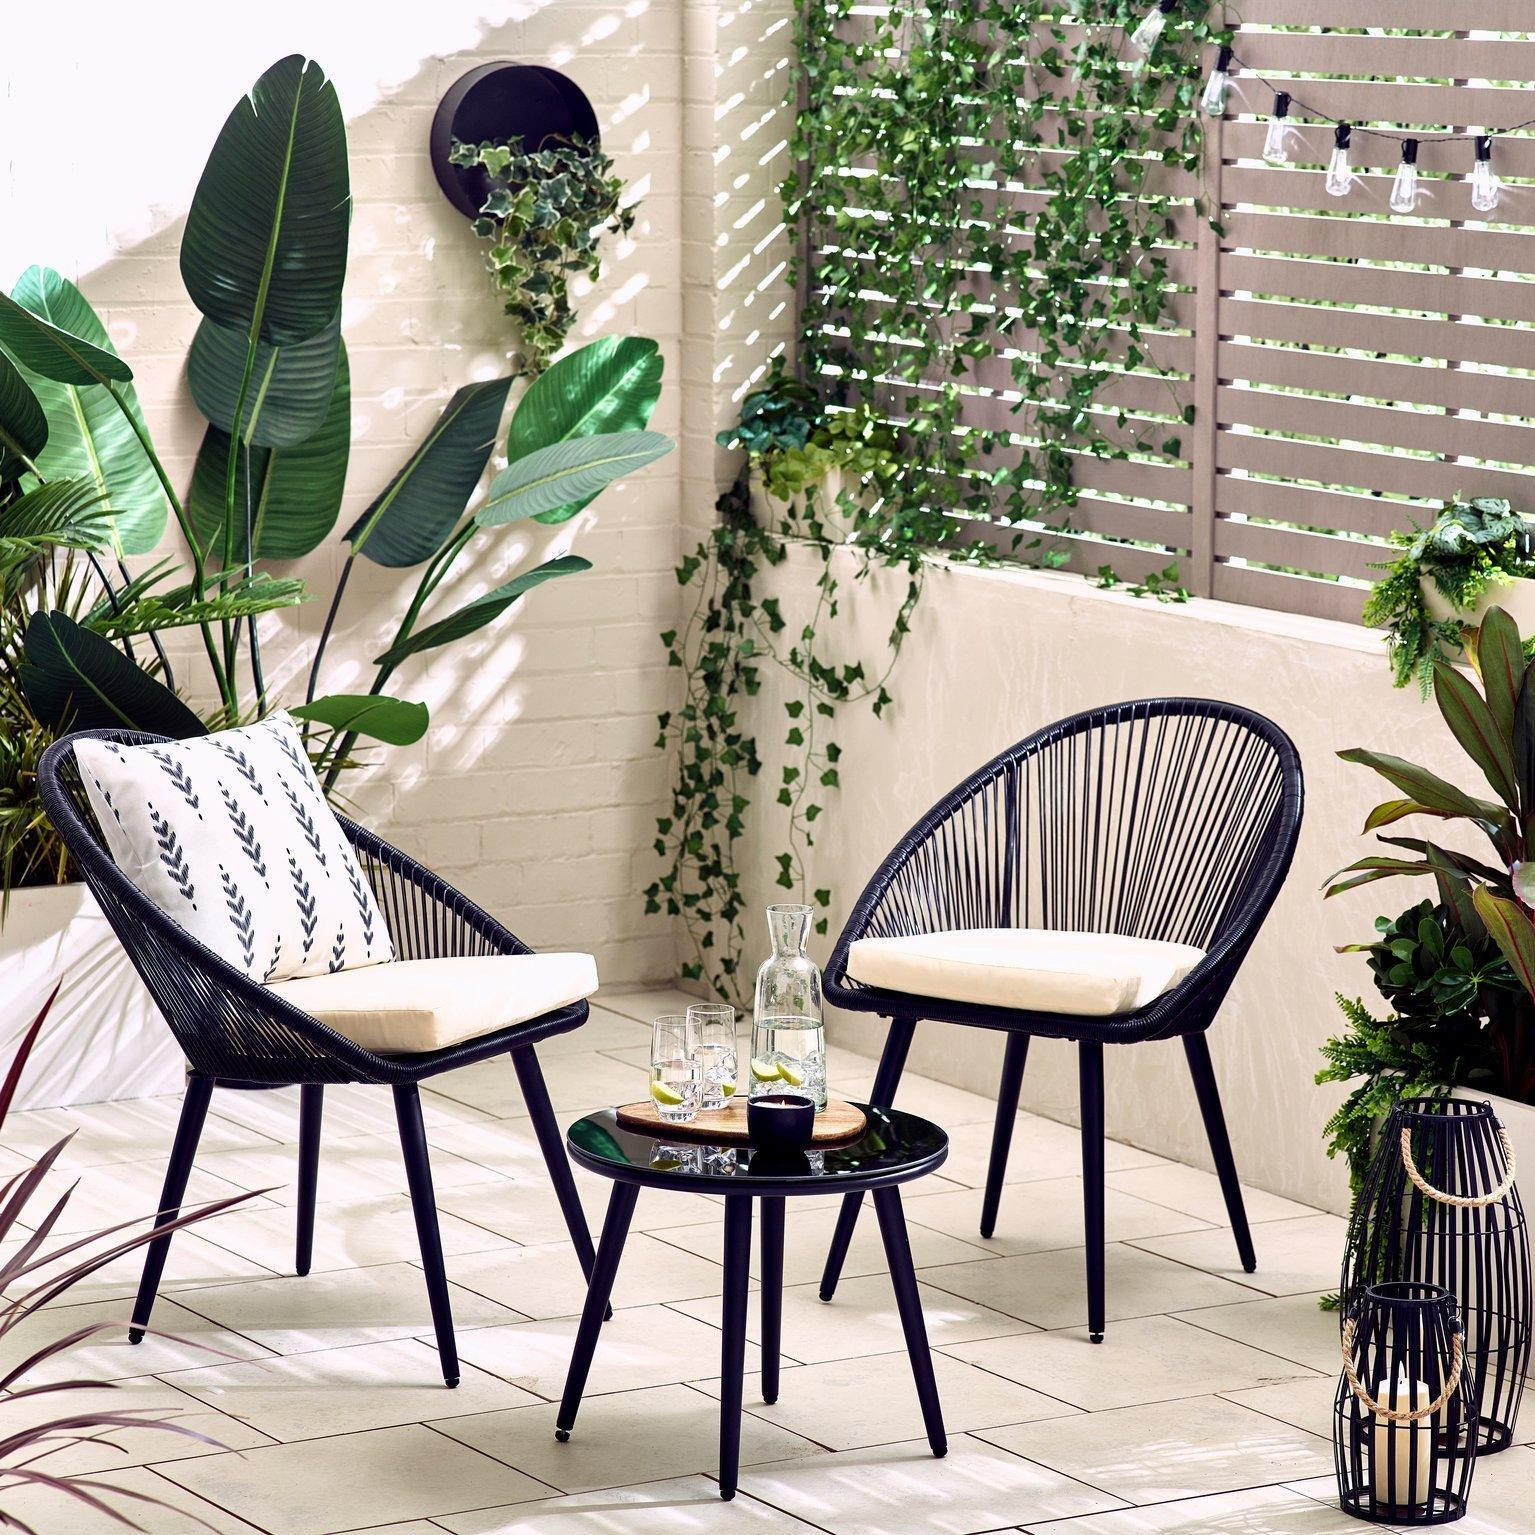 Outdoor Garden Furniture - Bora 2 Seat Black Garden Table and Chairs Bistro Set - image 1